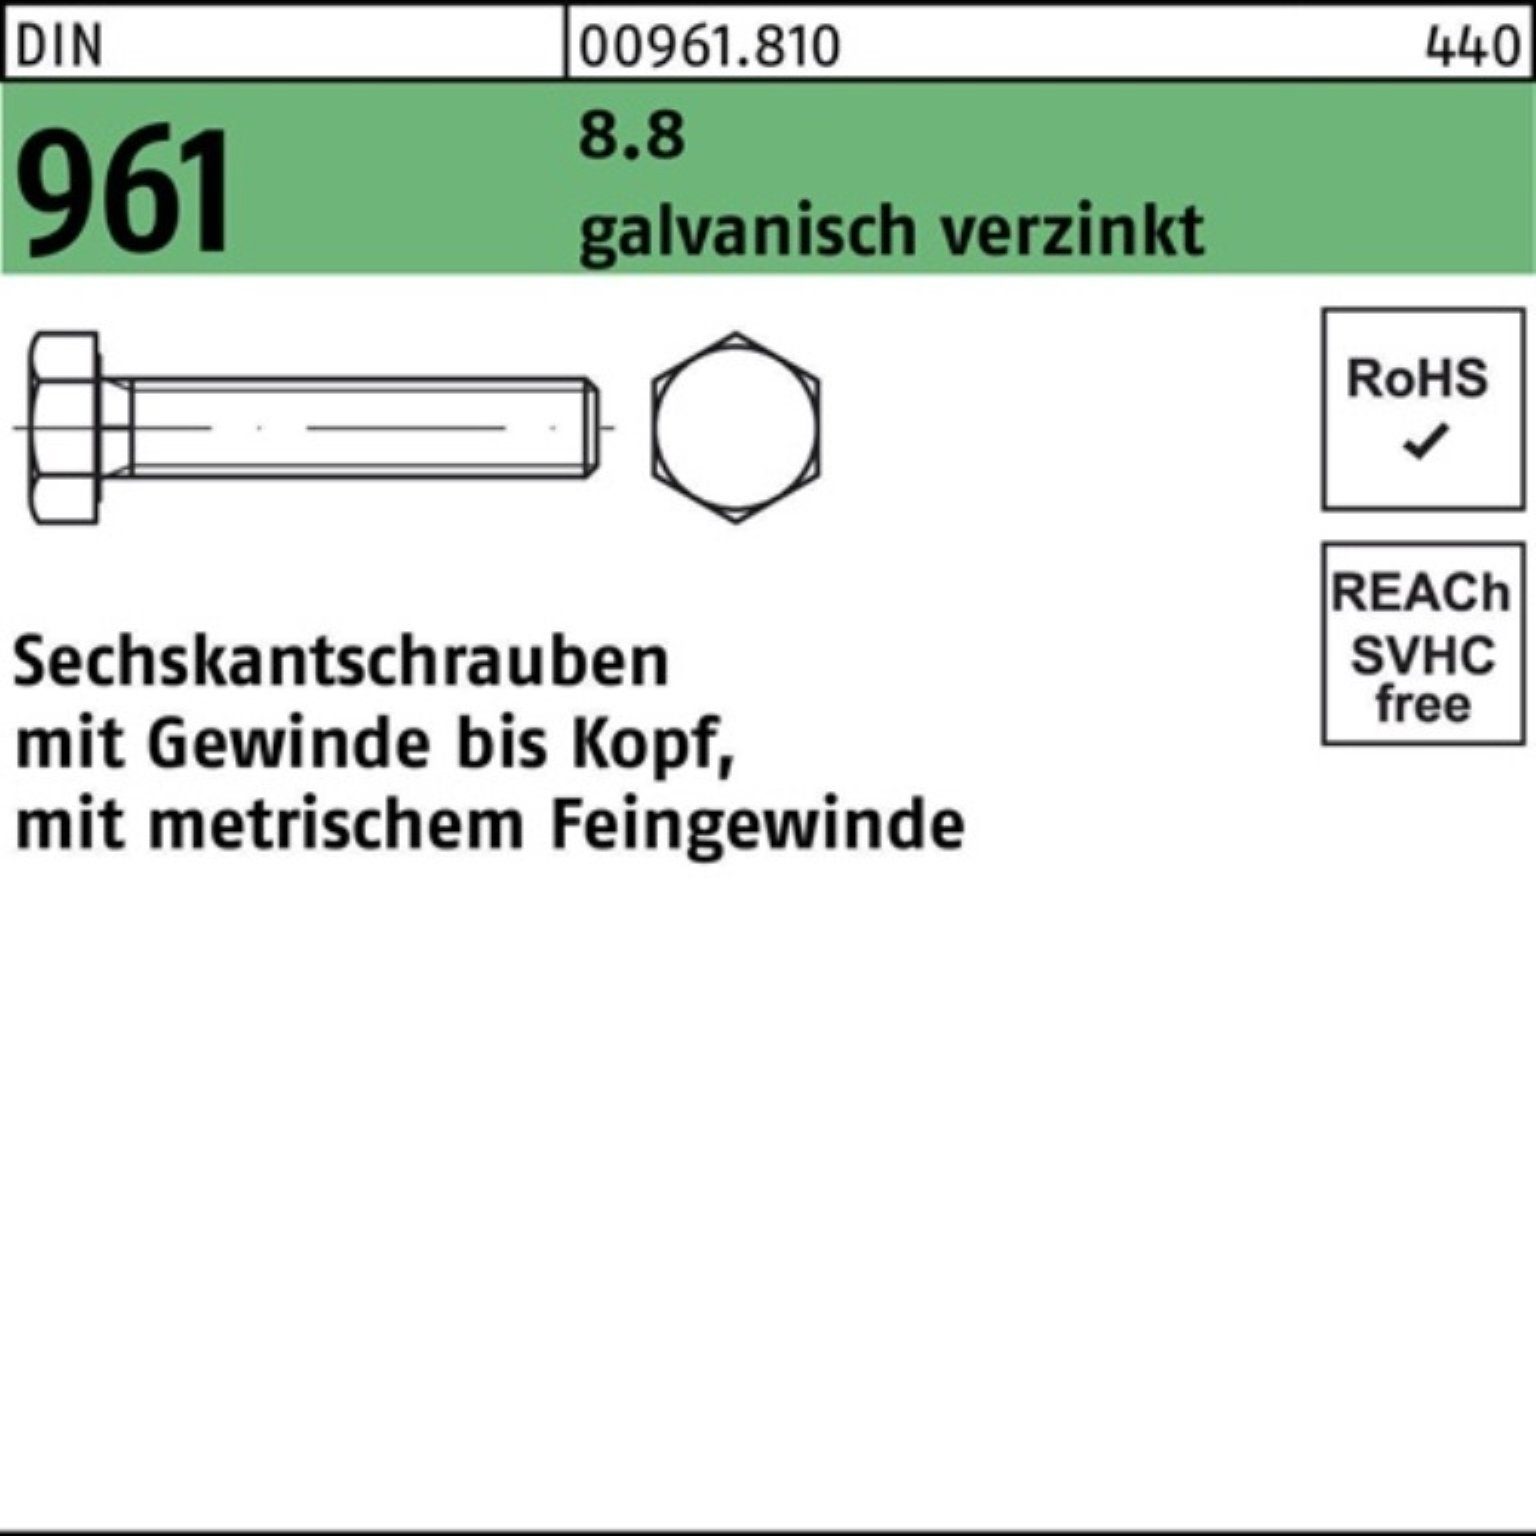 Reyher Sechskantschraube 100er Pack Sechskantschraube 60 M20x1,5x VG 961 25 DIN galv.verz. 8.8